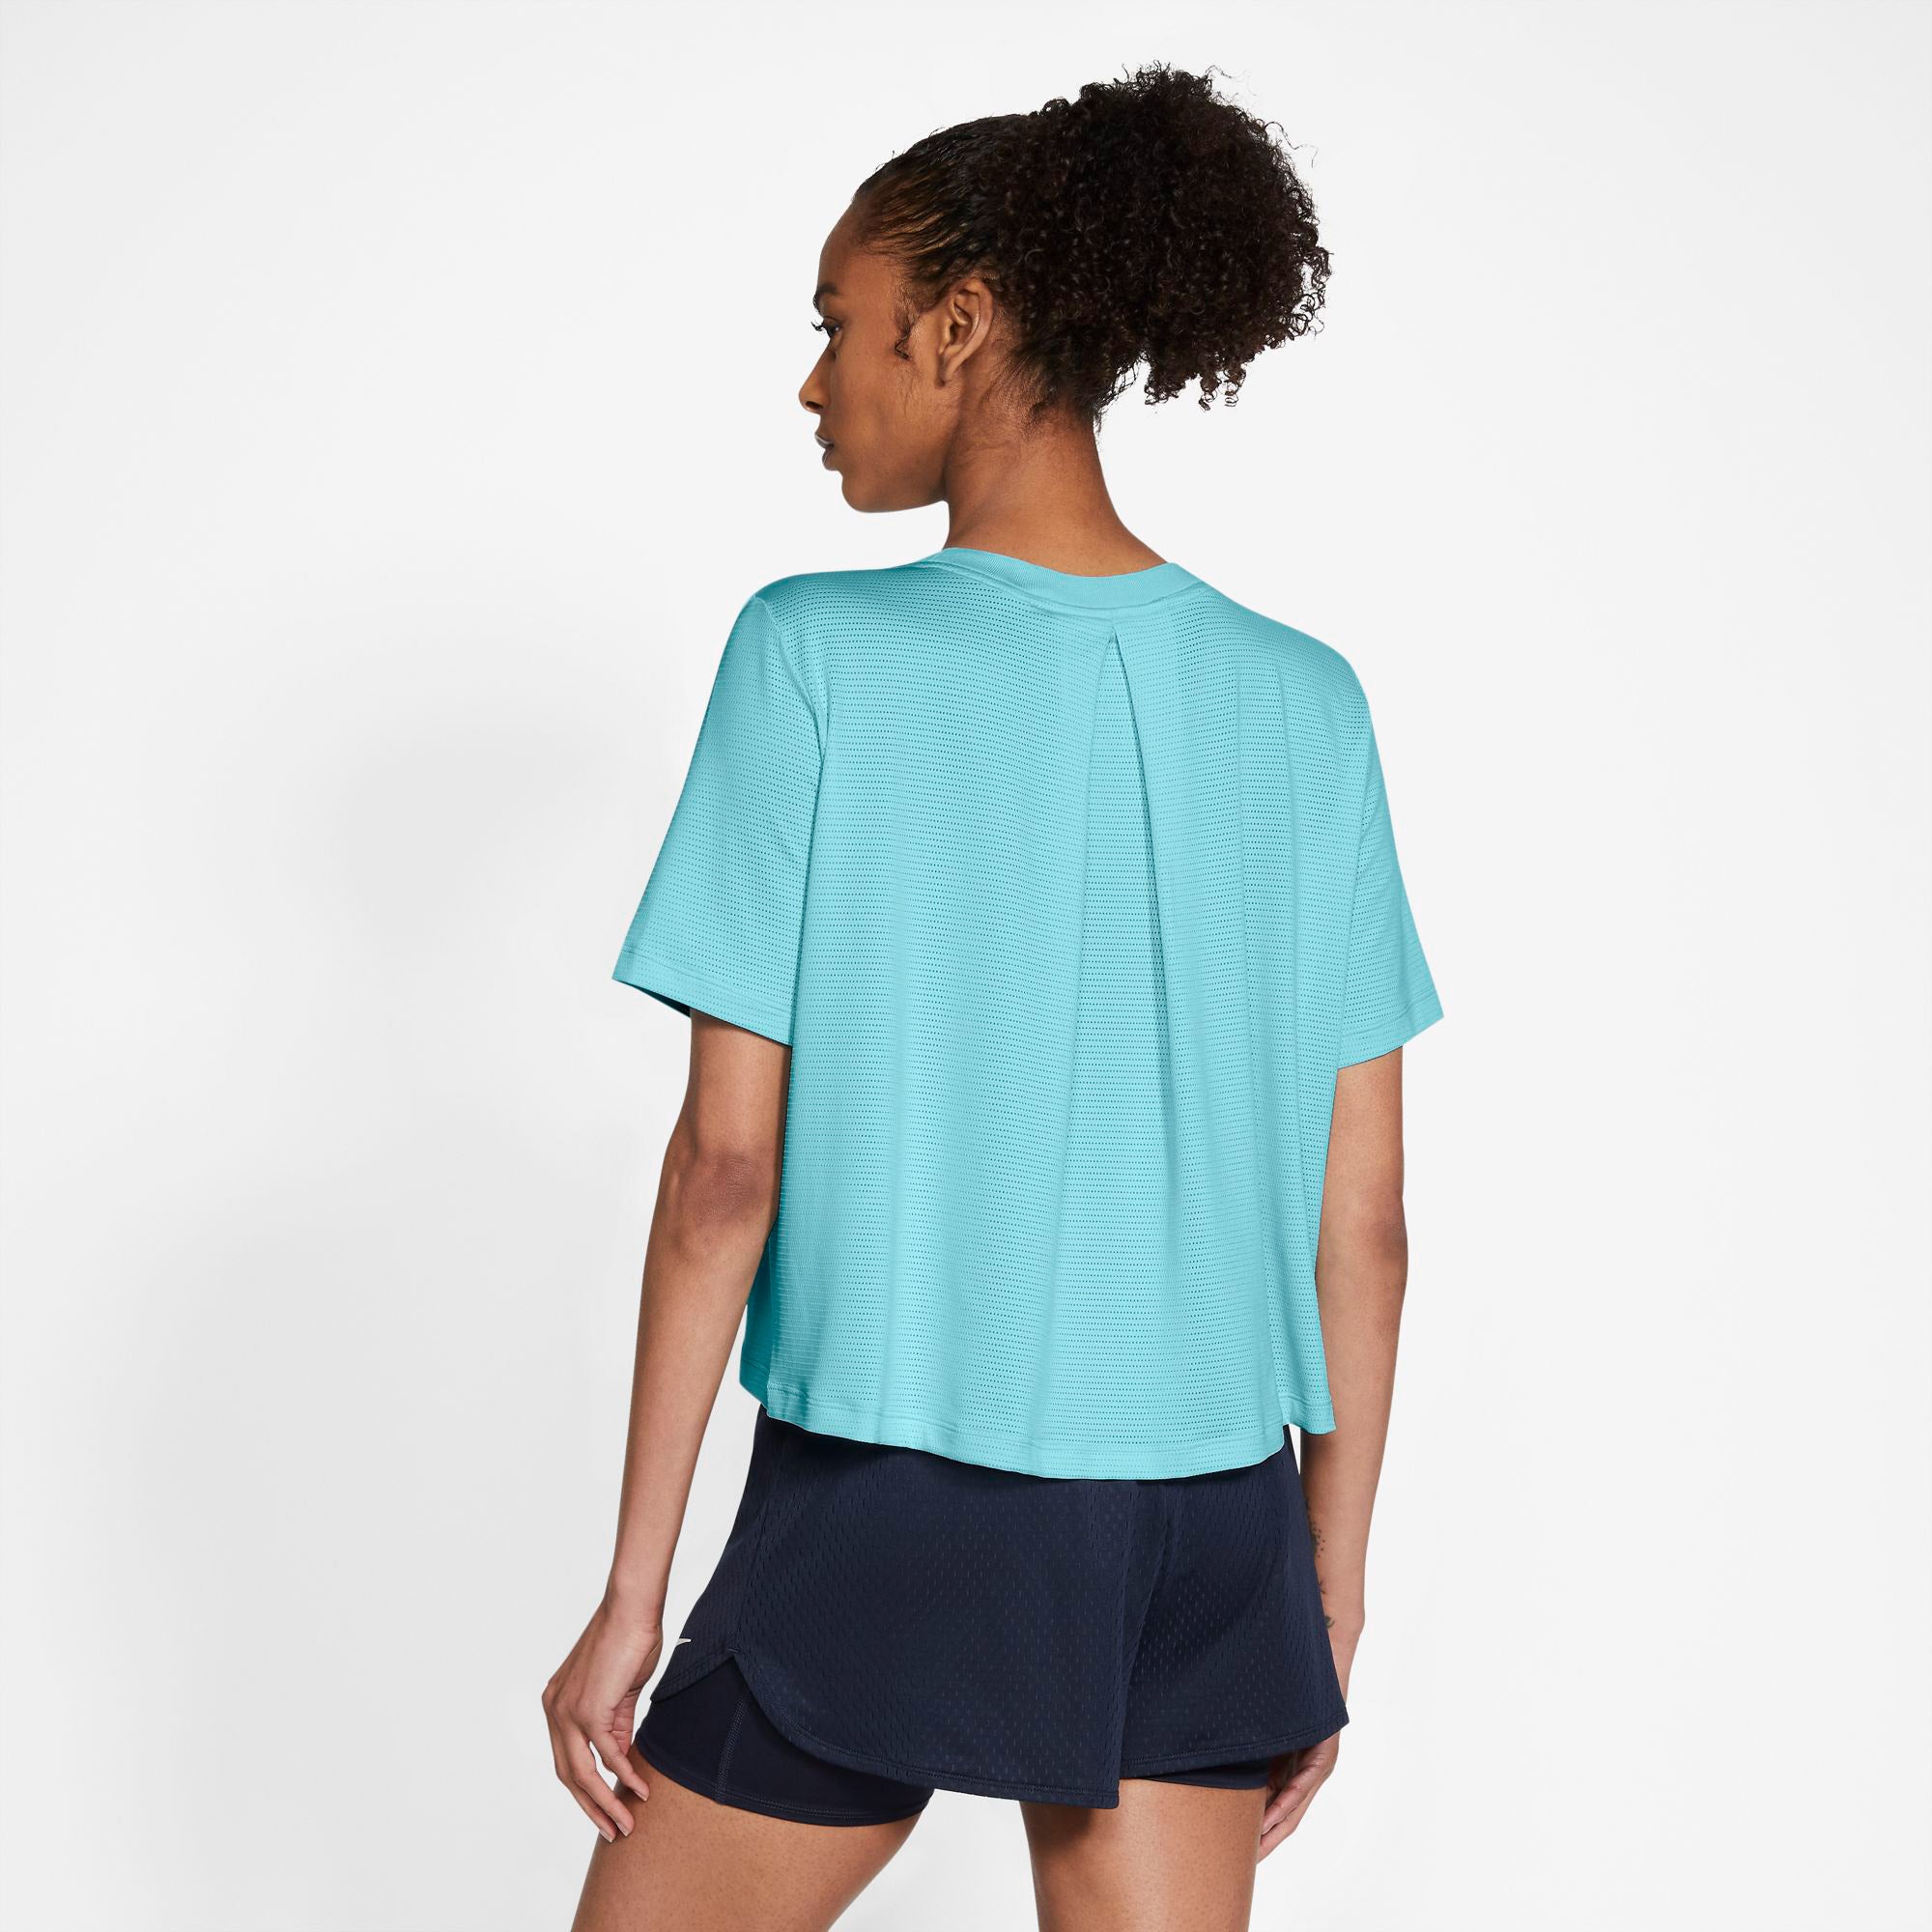 Nike Dri-Fit Advantage Women's Tennis Shirt Blue (2)